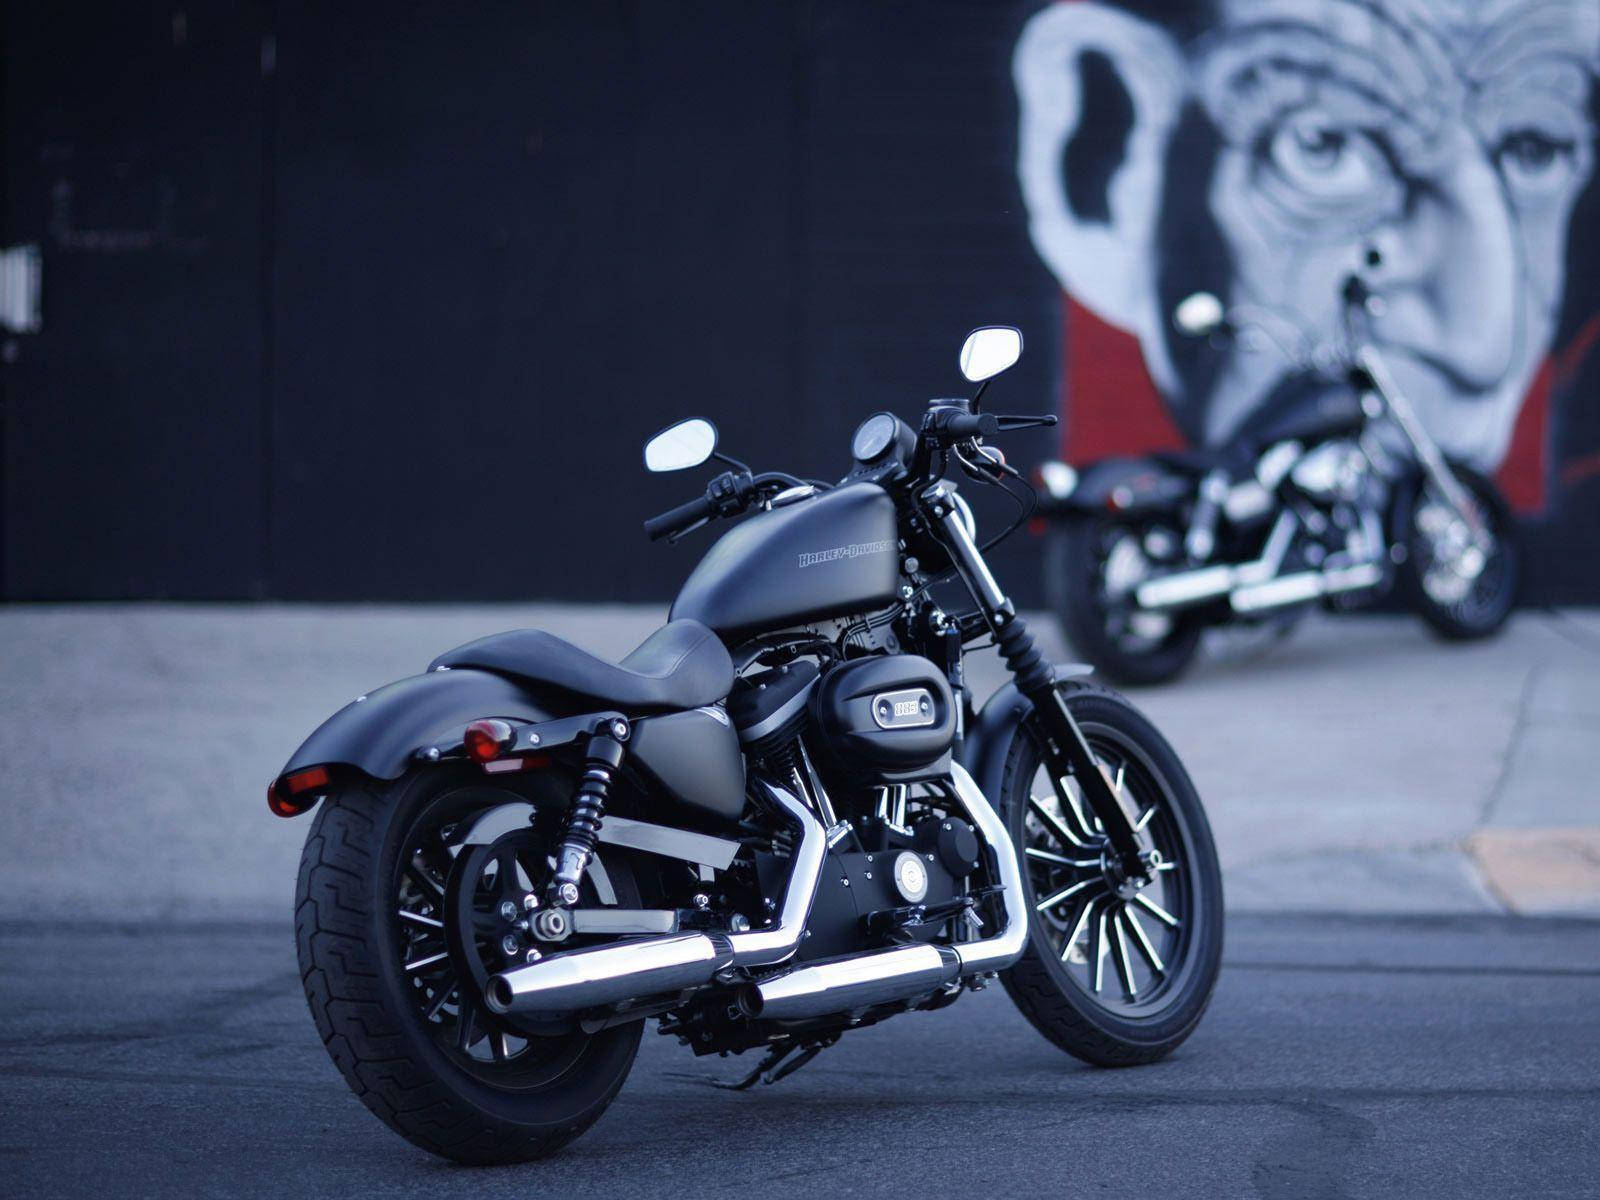 Harley Davidson In Charcoal Black